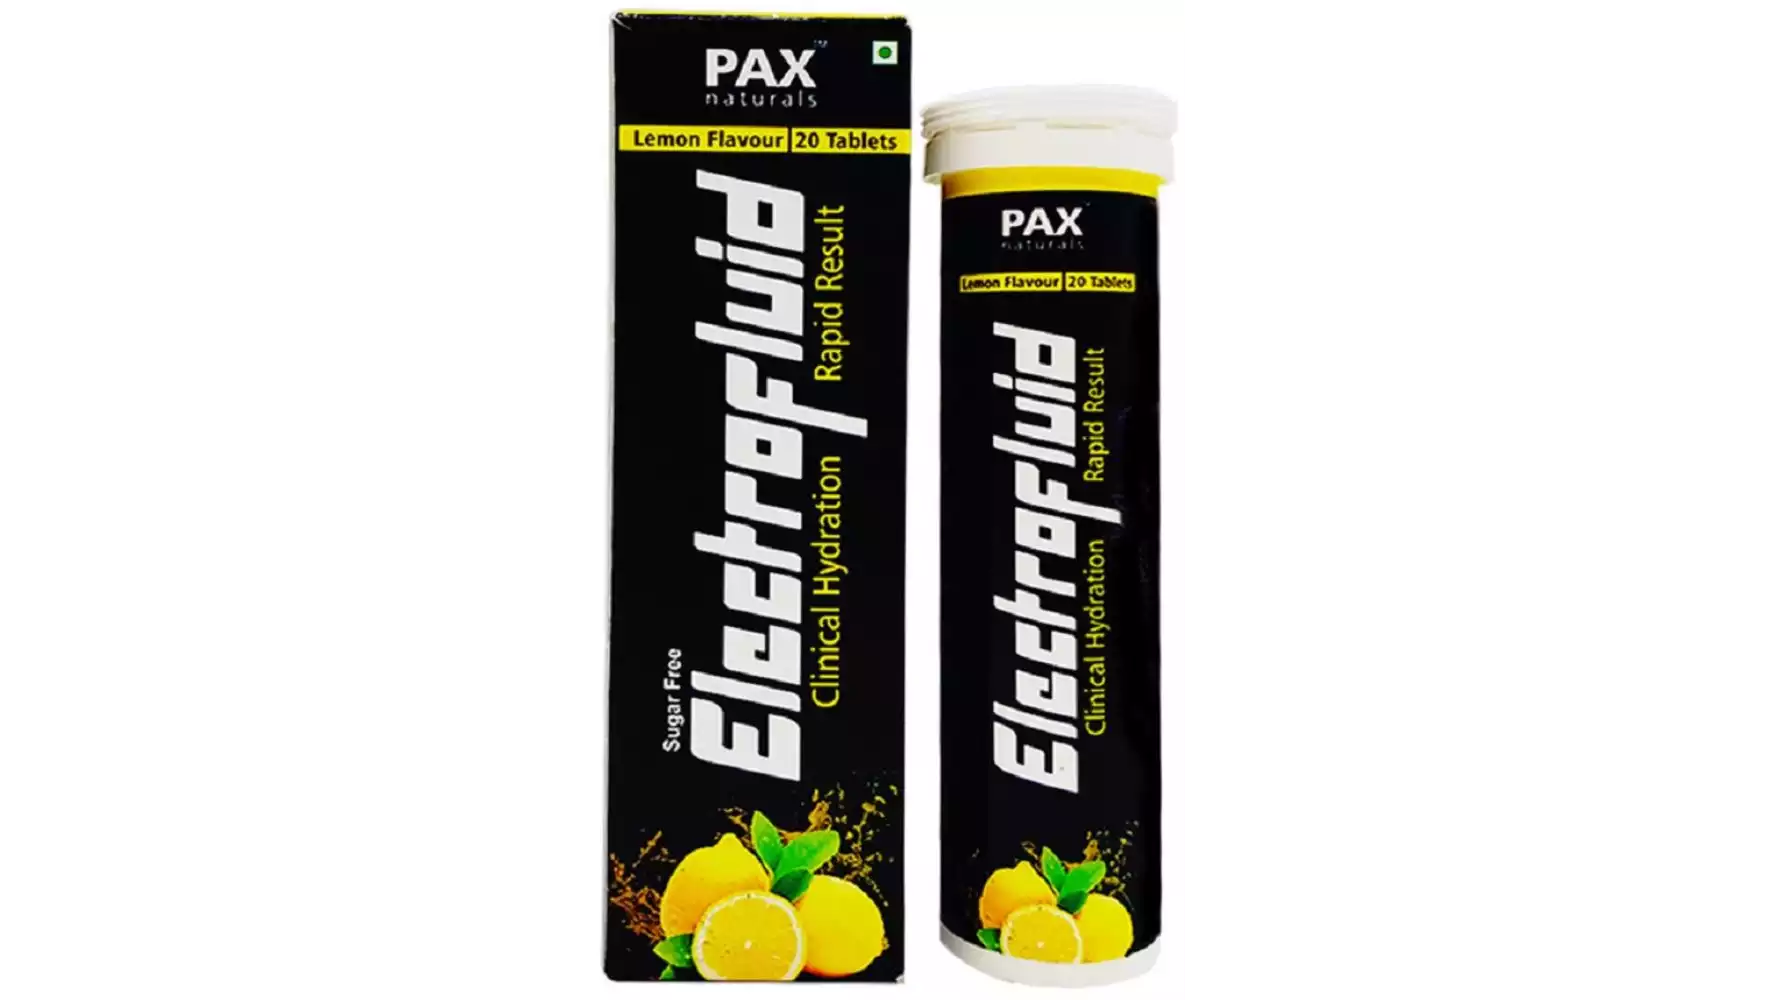 Pax Naturals Electrofluid Tablets (20tab)